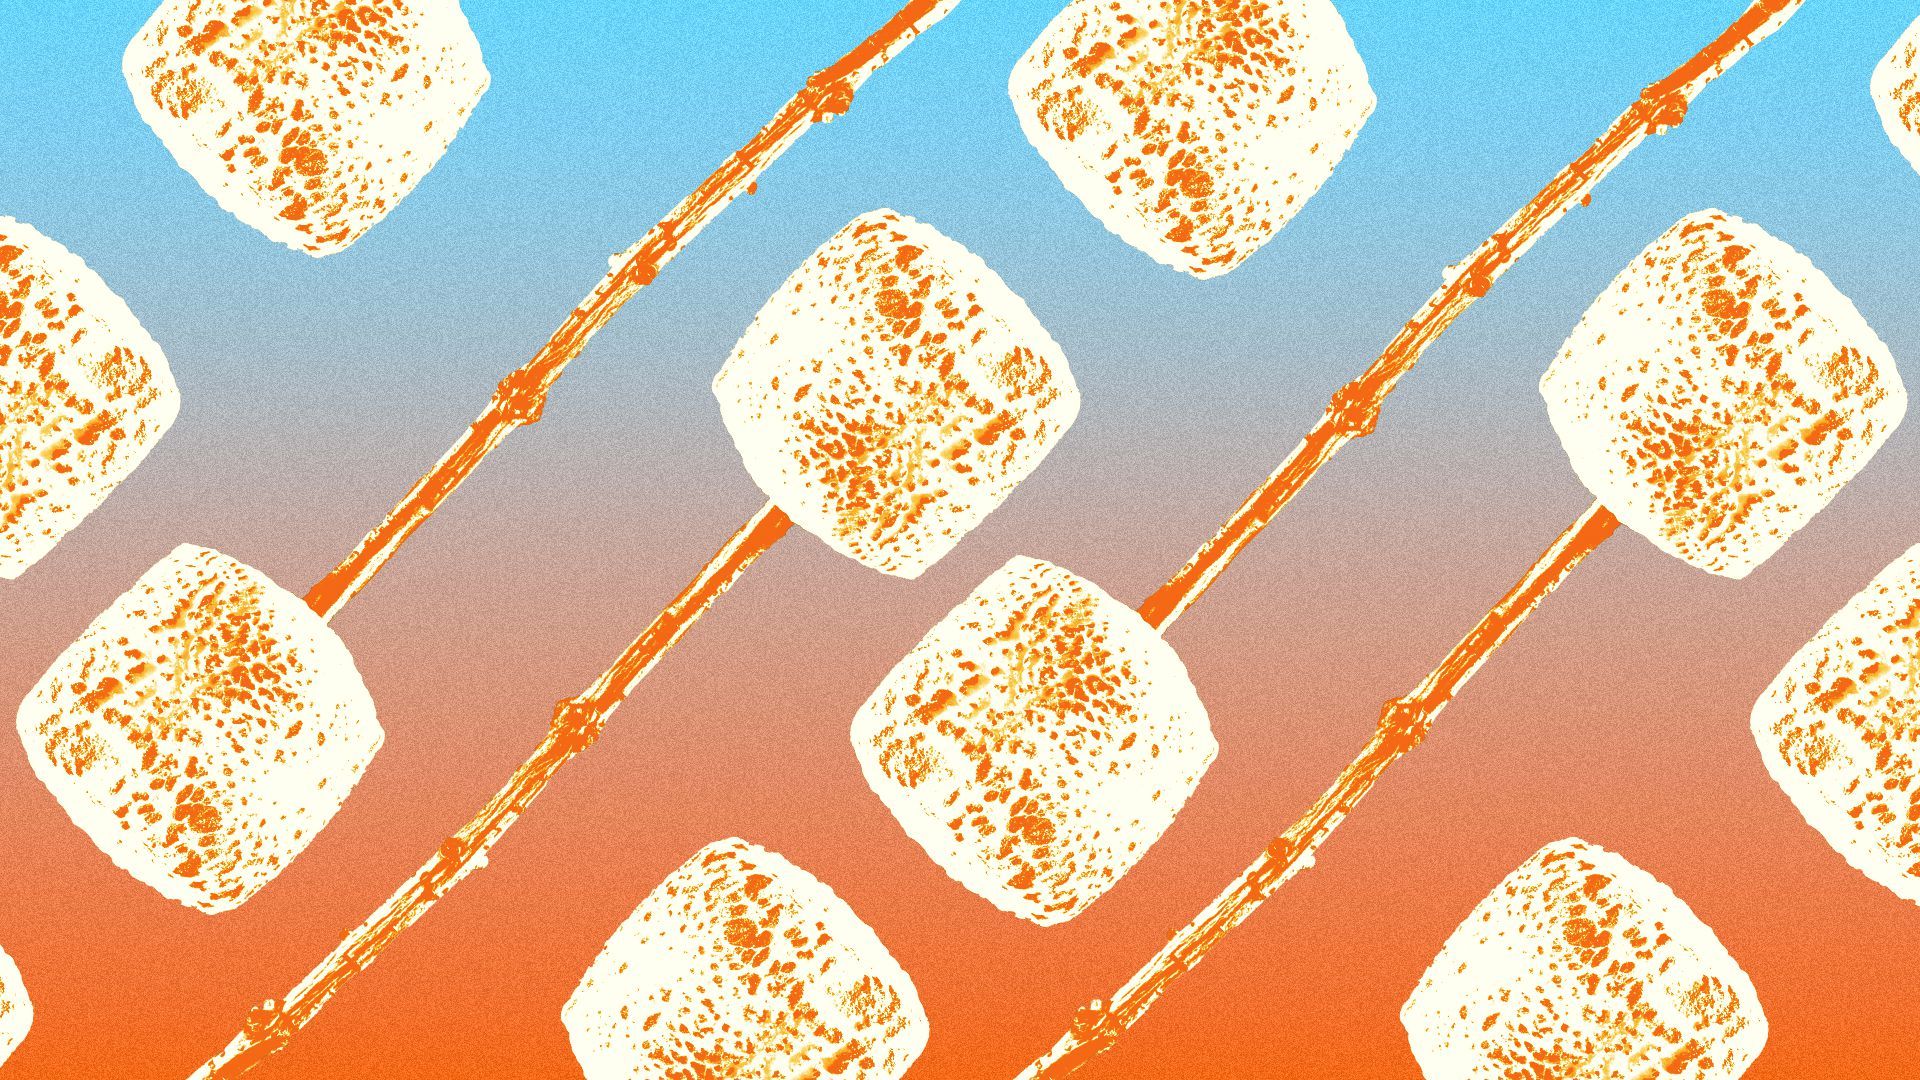 Illustration of a pattern of toasted marshmallows on sticks.